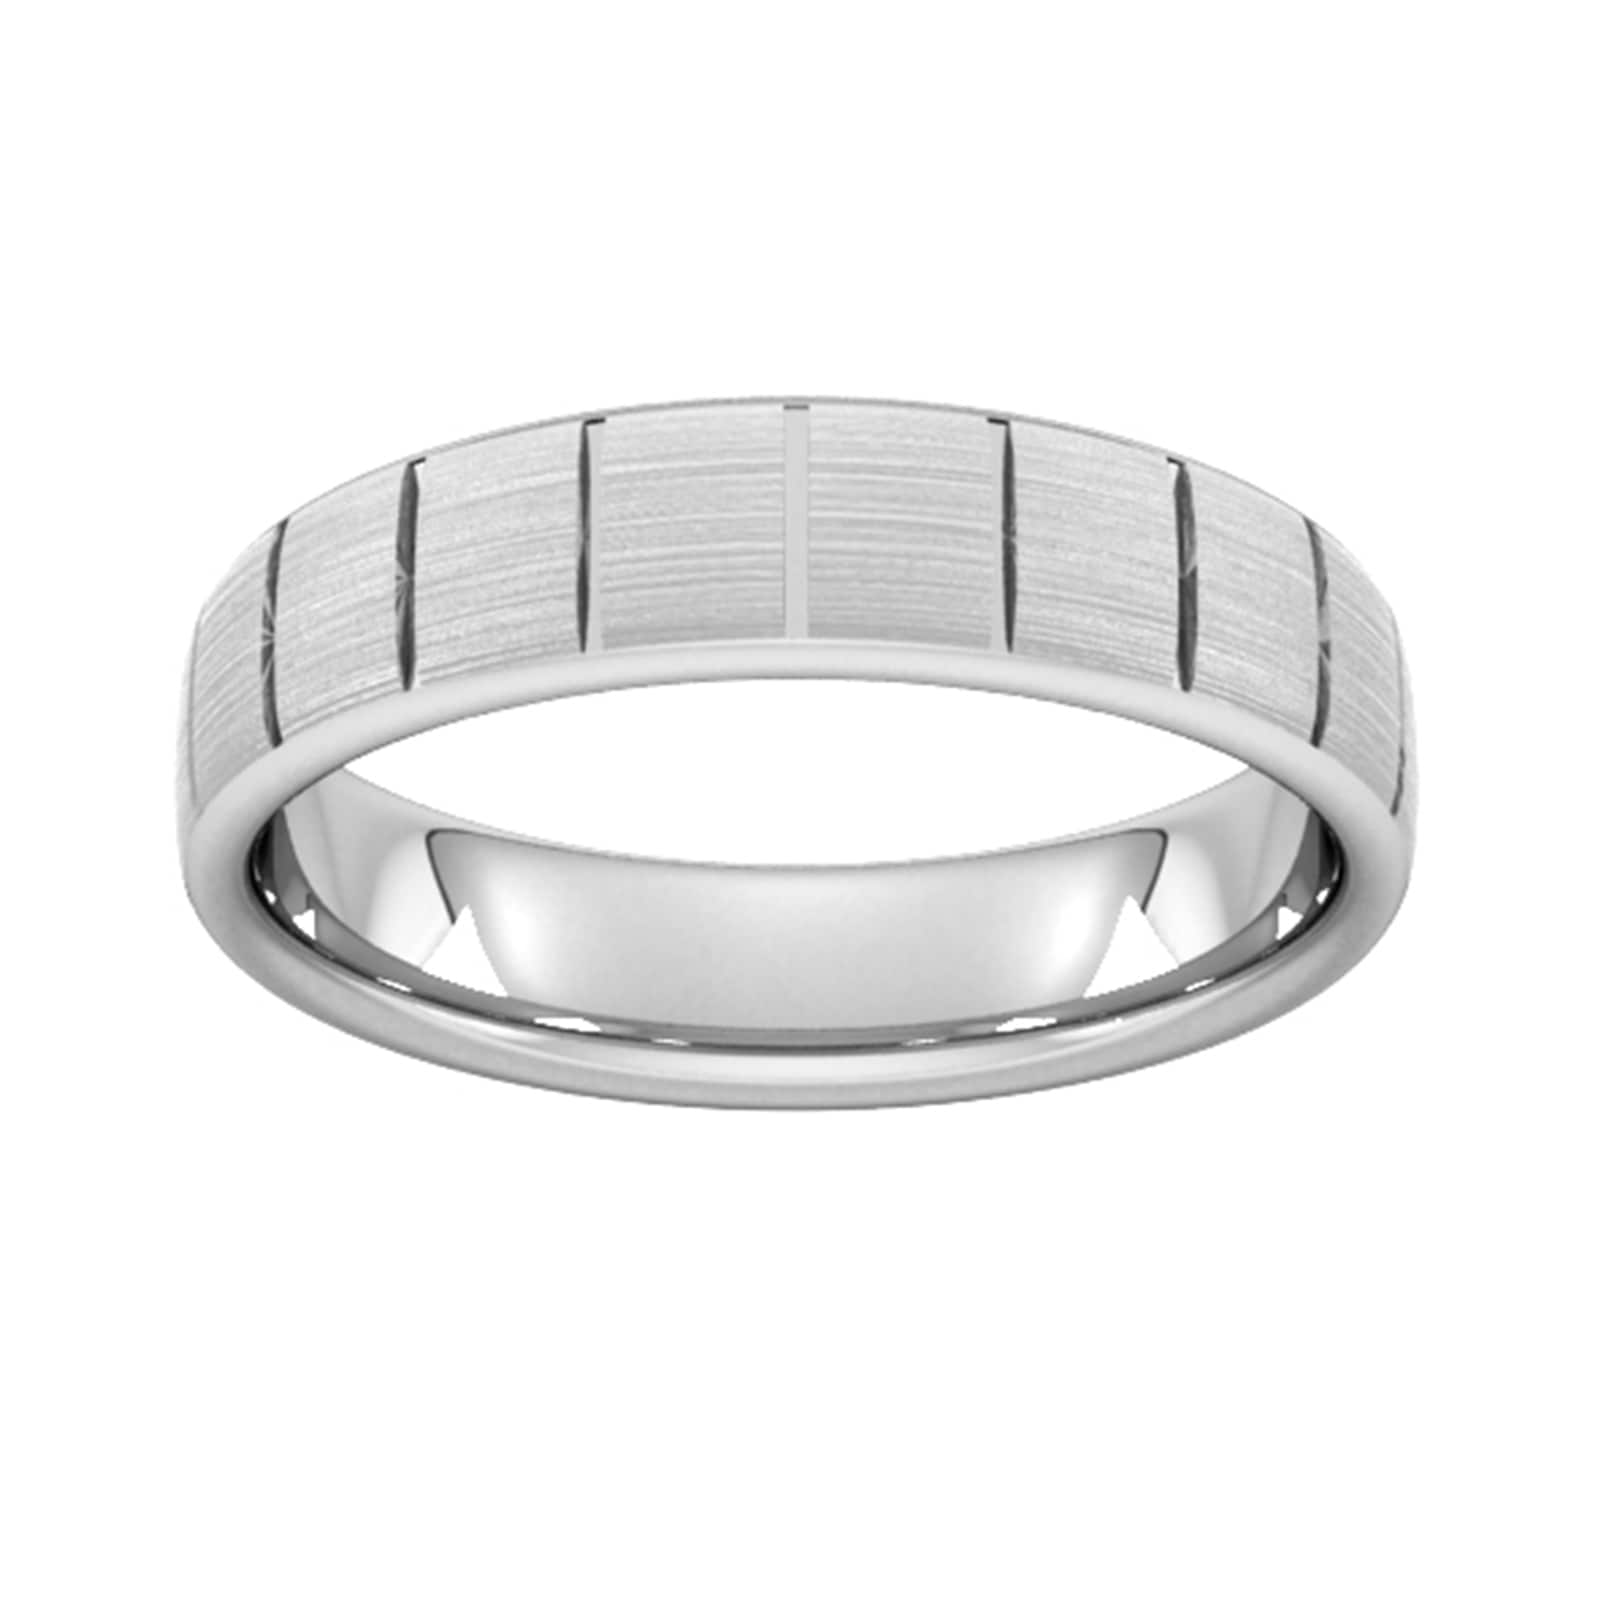 5mm Slight Court Heavy Vertical Lines Wedding Ring In 950 Palladium - Ring Size N